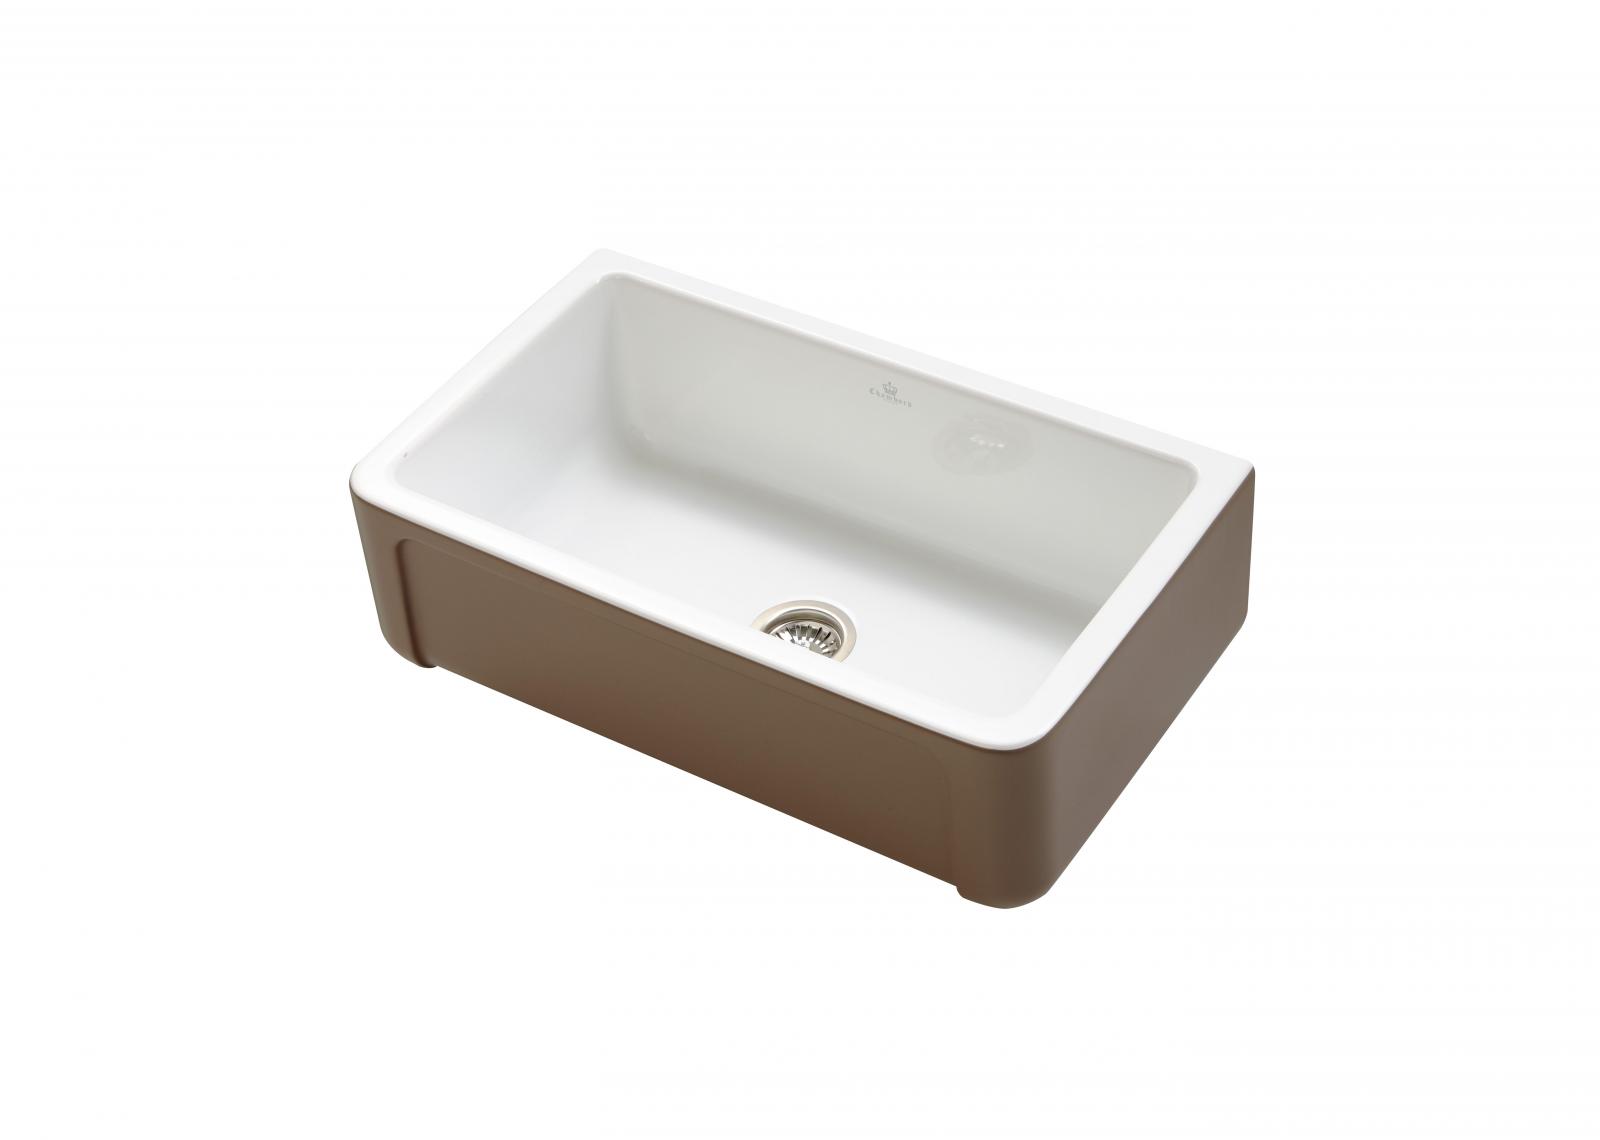 High-quality sink Henri II Le Grand Taupe - single bowl, ceramic ambience